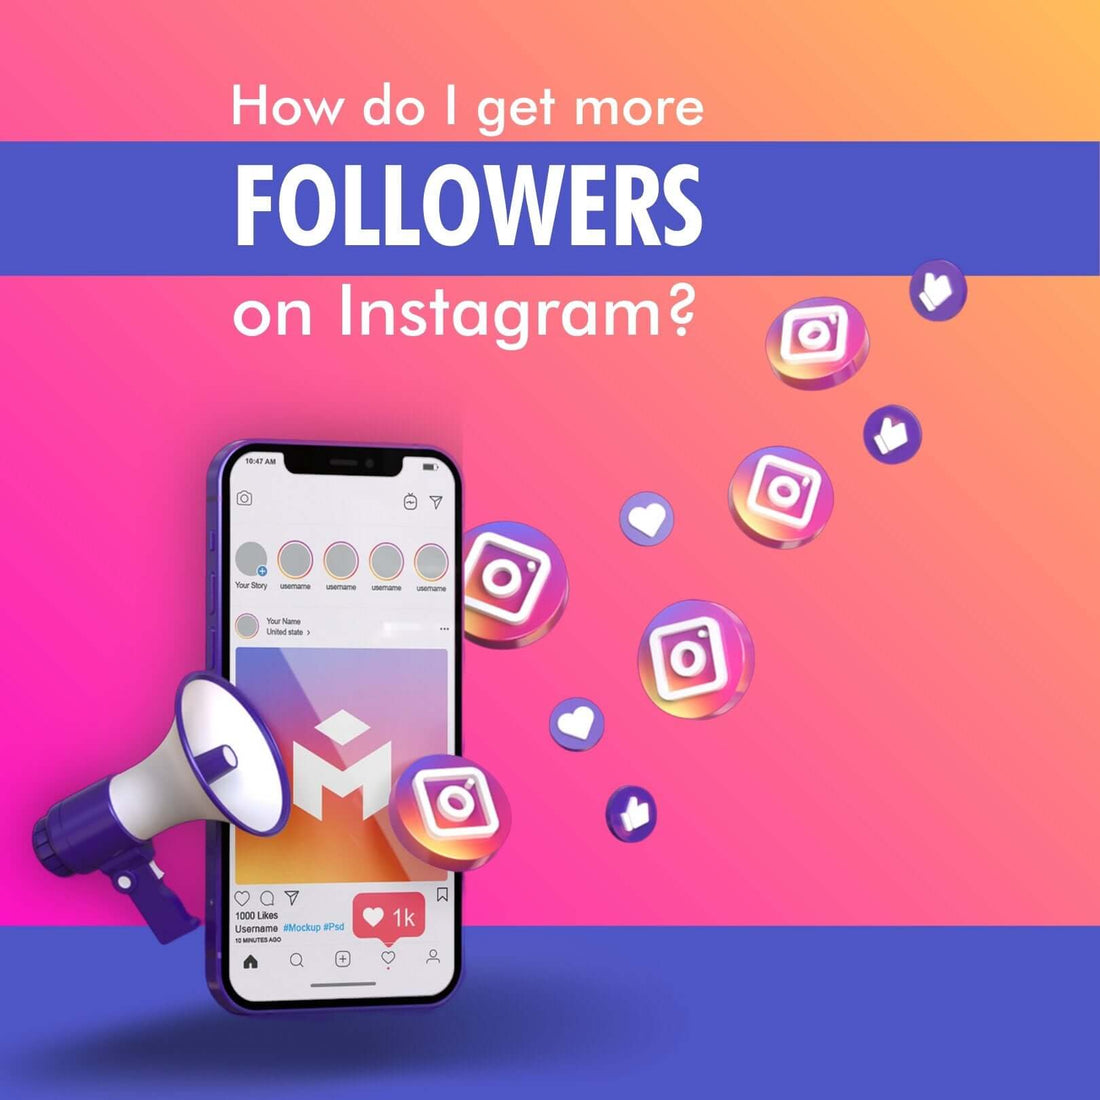 How do I get more followers on Instagram?